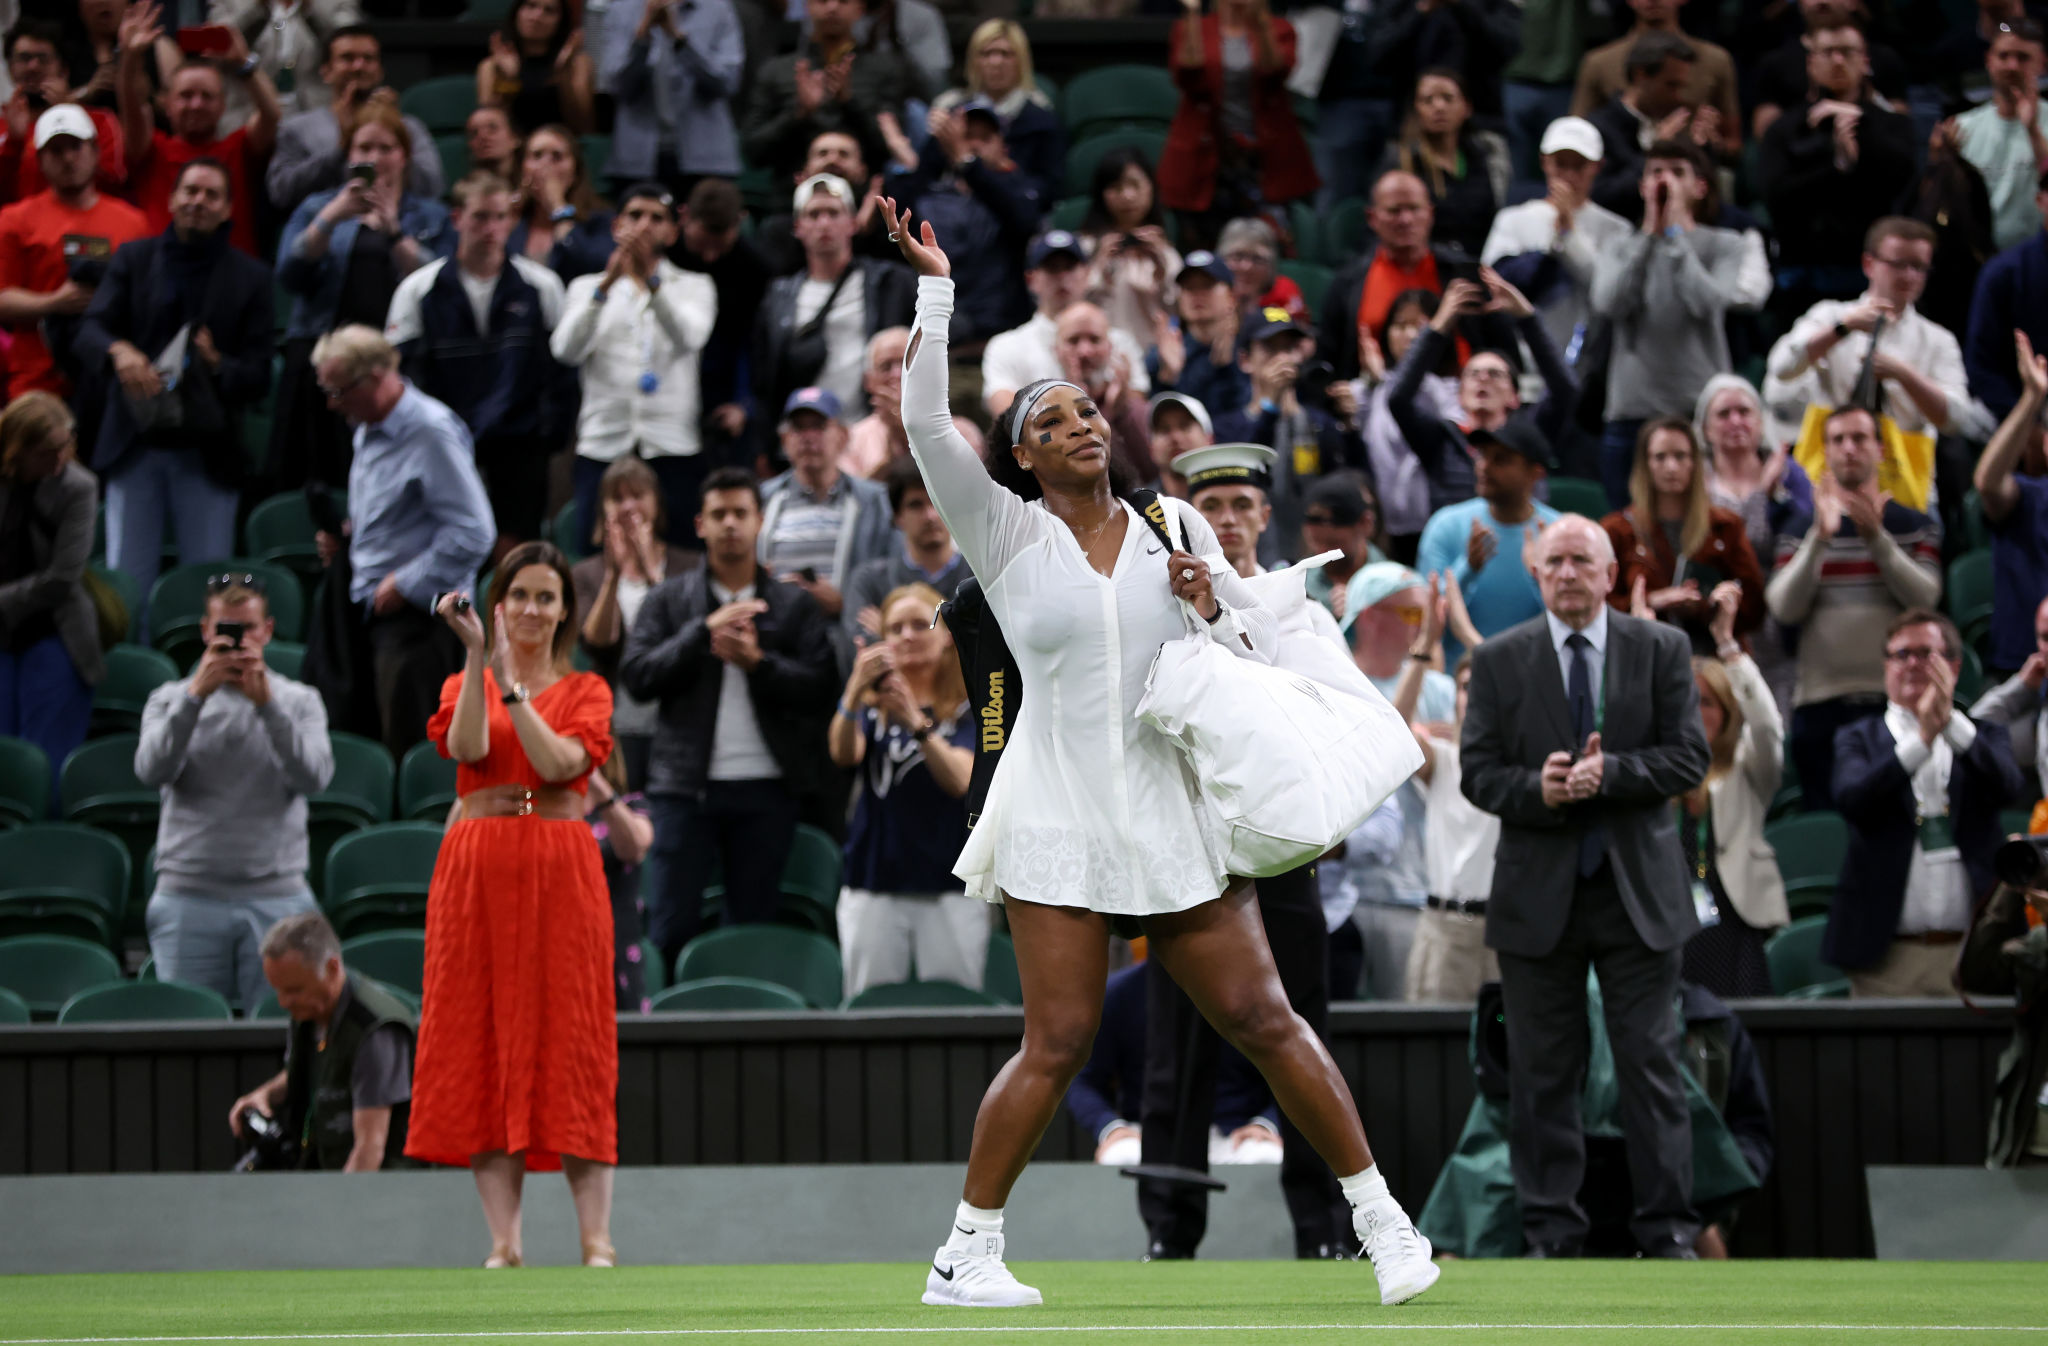 Wimbledon 2022 LIVE: Serena, Nadal, Swiatek HEADLINE Day 2 action in Wimbledon today, Follow Wimbledon 2022 LIVE ACTION & Results